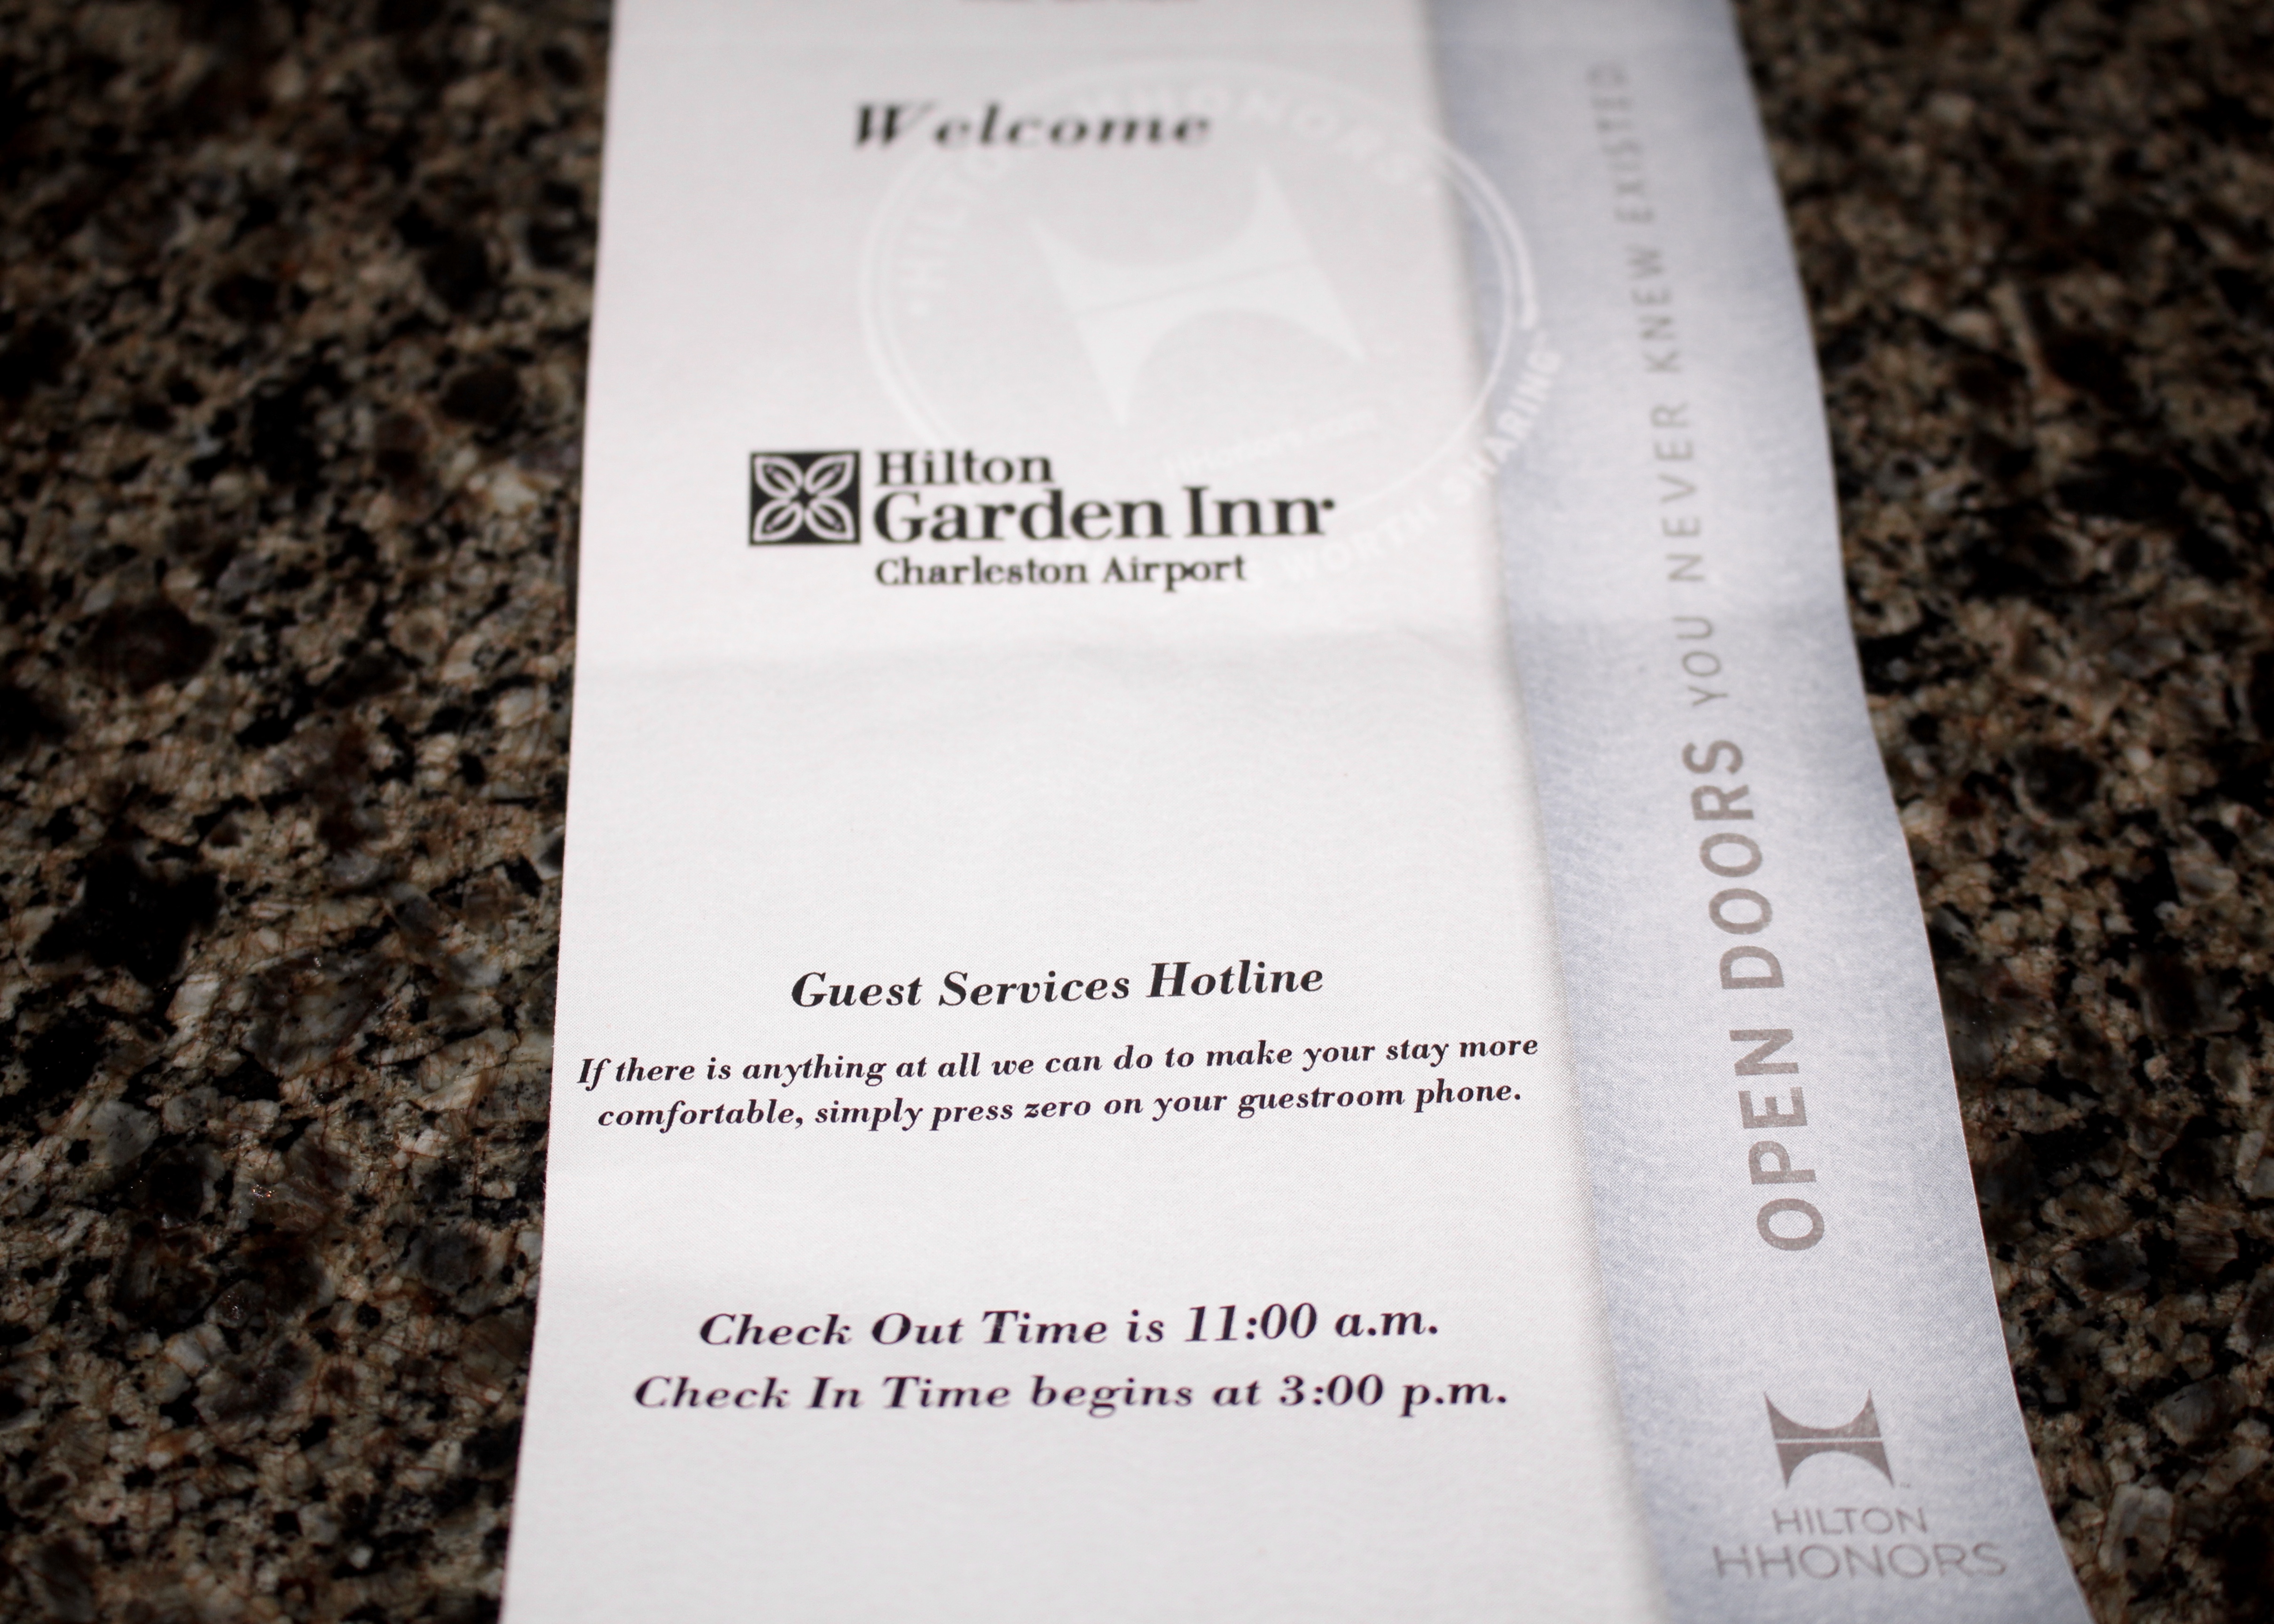 Our Hilton Garden Inn Hotel Experience | Trip to Charleston, South Carolina.